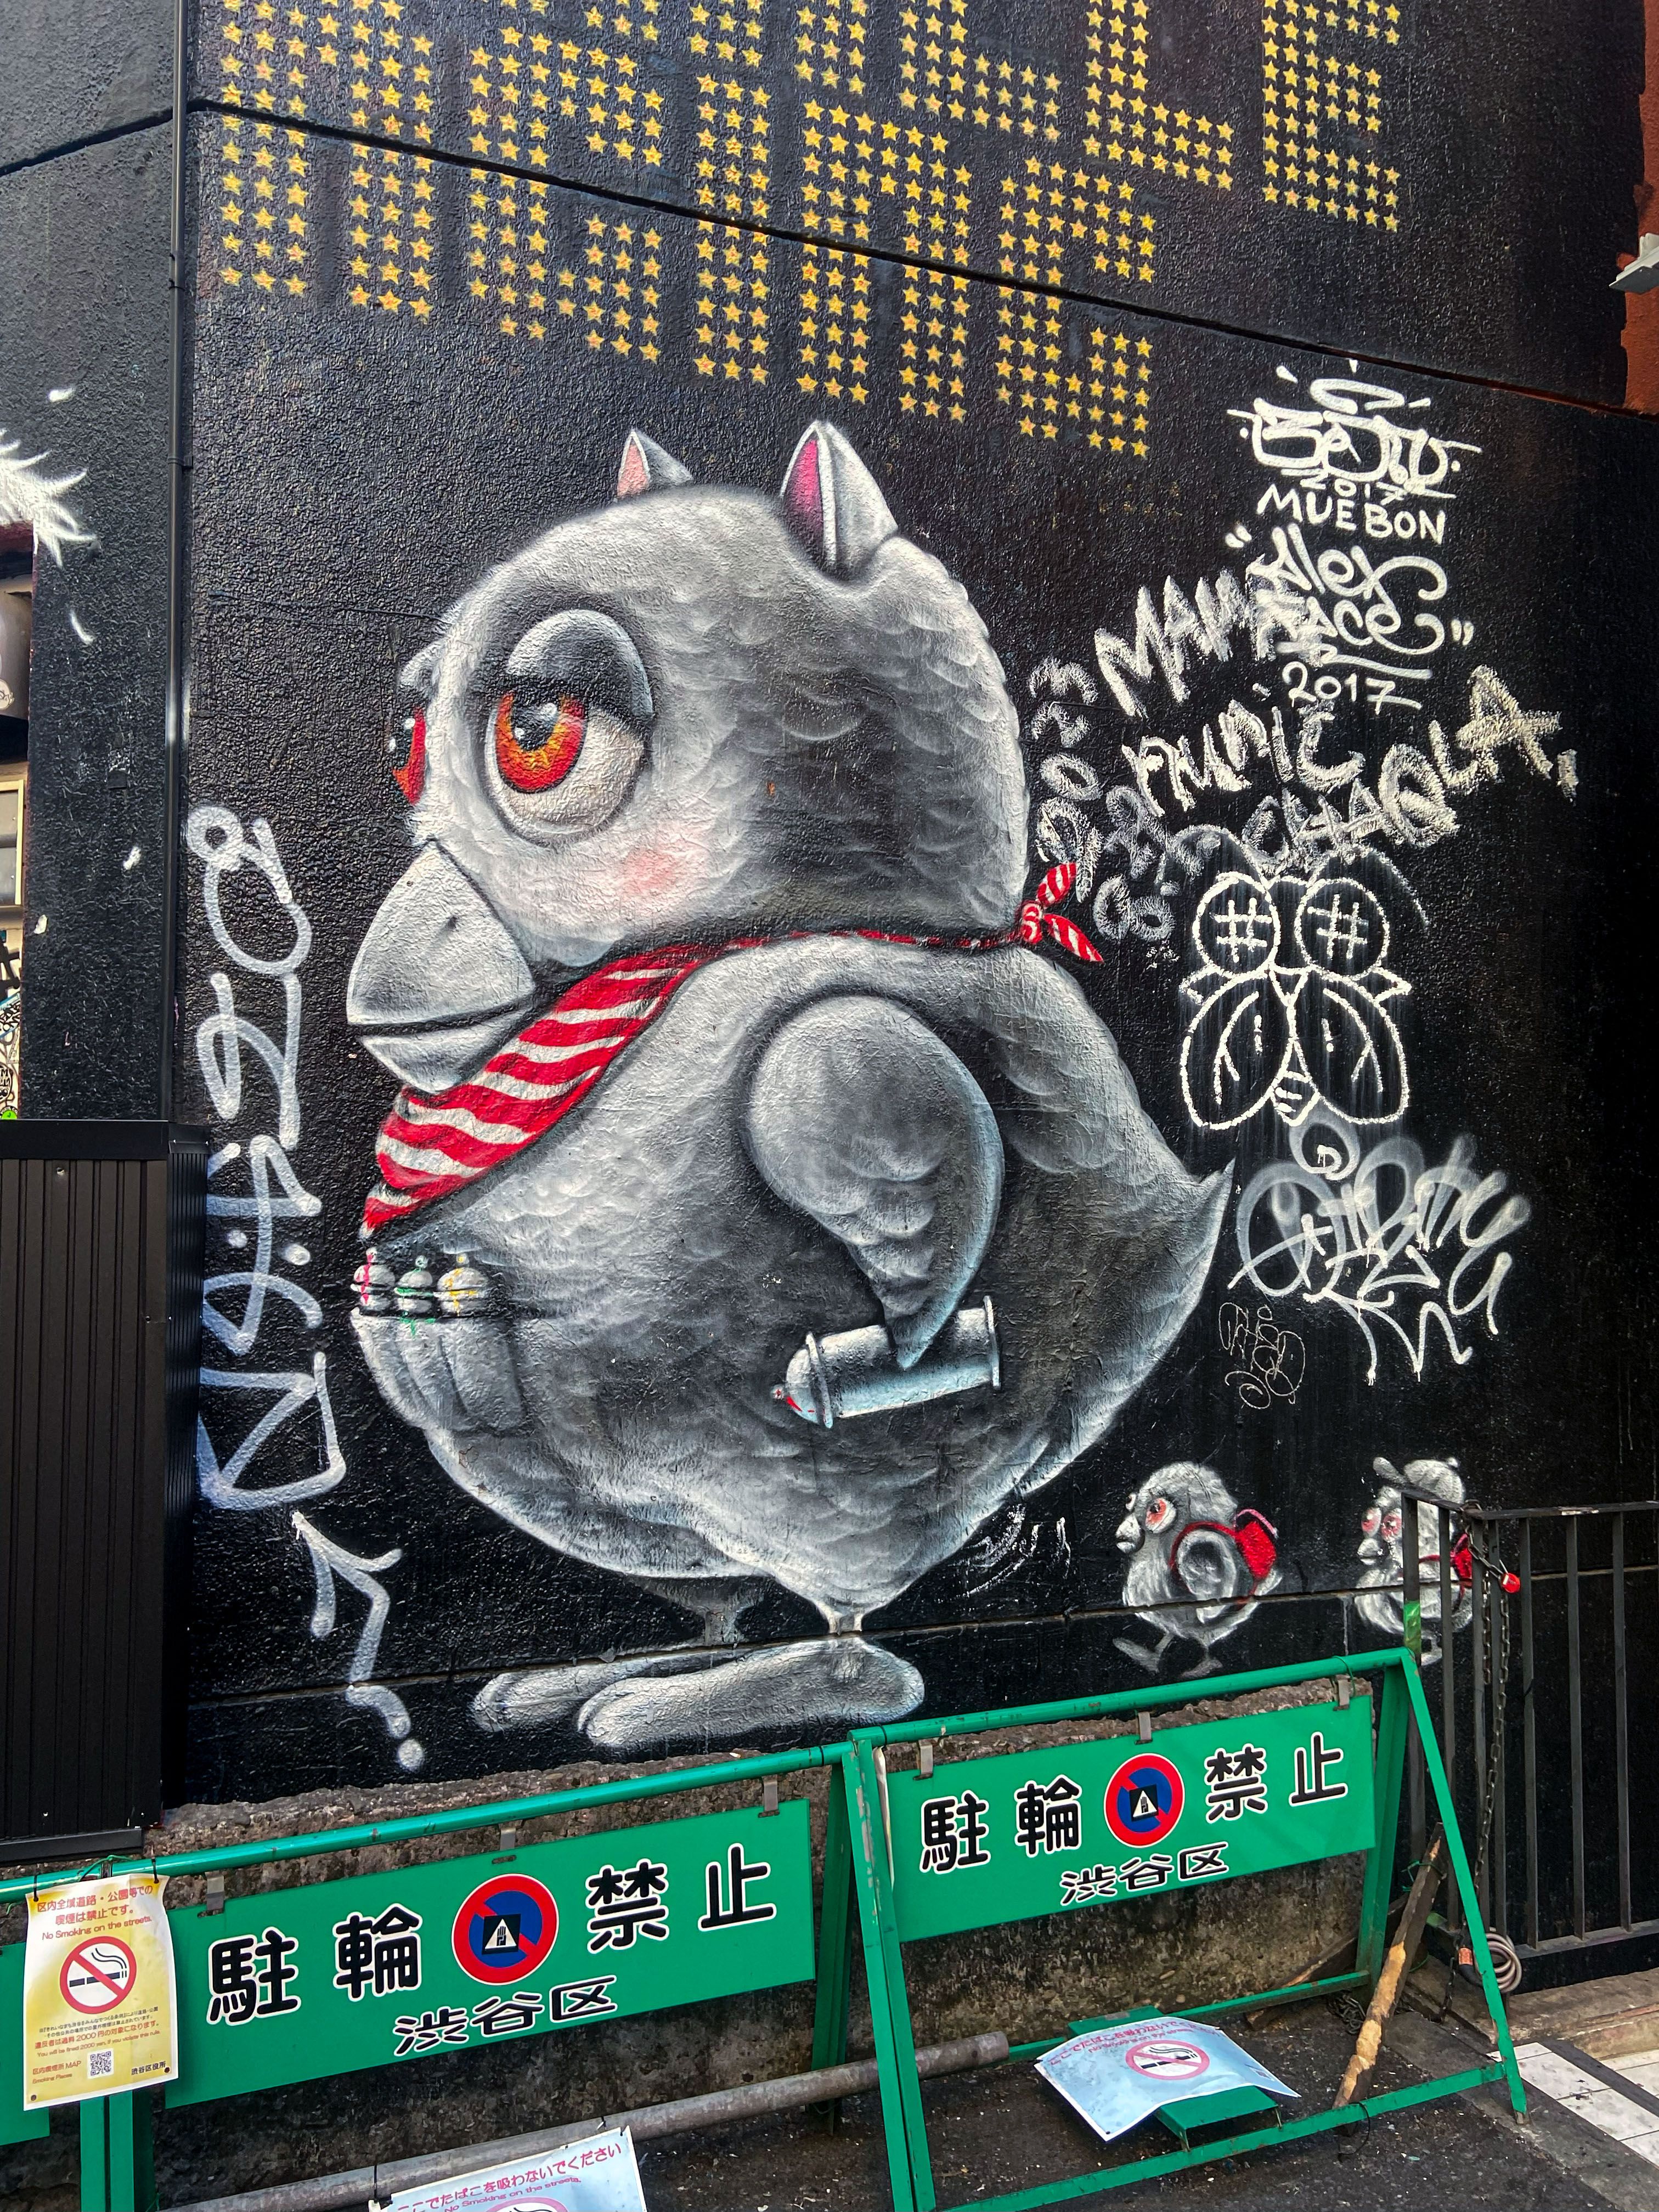 Furby graffiti